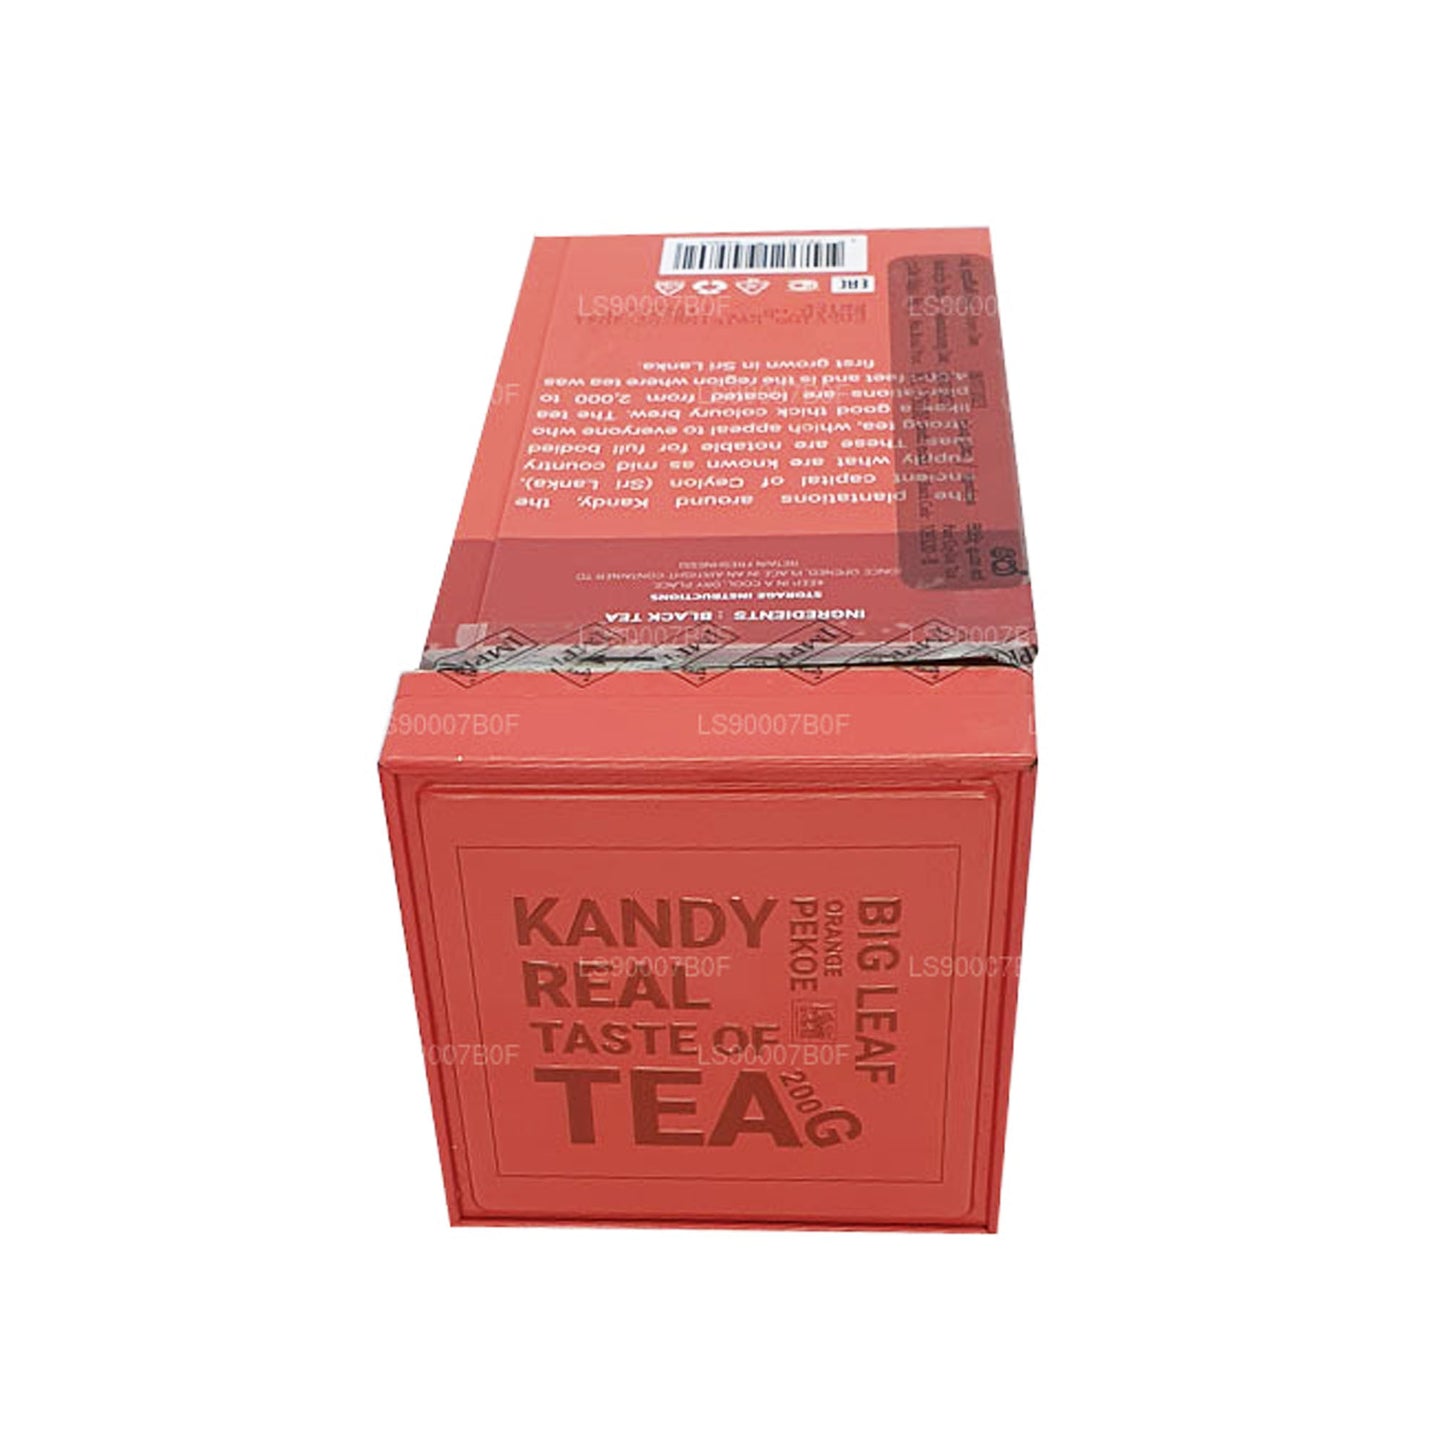 Carrito de carne Impra Kandy Taste of Tea Big Leaf Orange Pekoe (200 g)